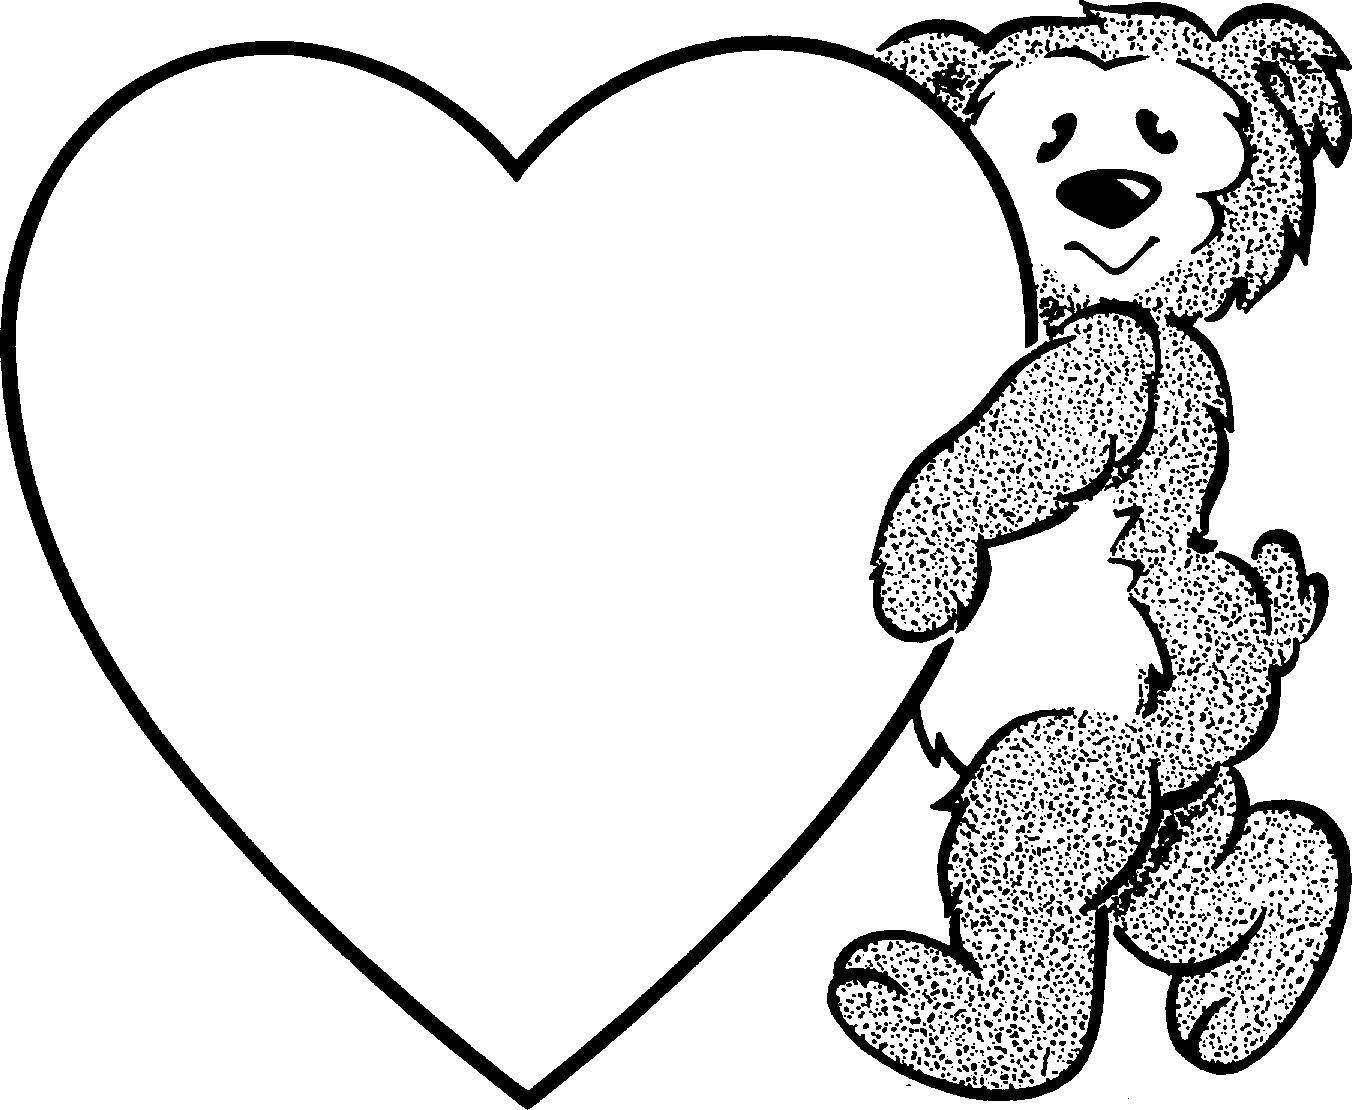 Coloring Bear hugging a heart. Category I love you. Tags:  heart shape, bear.